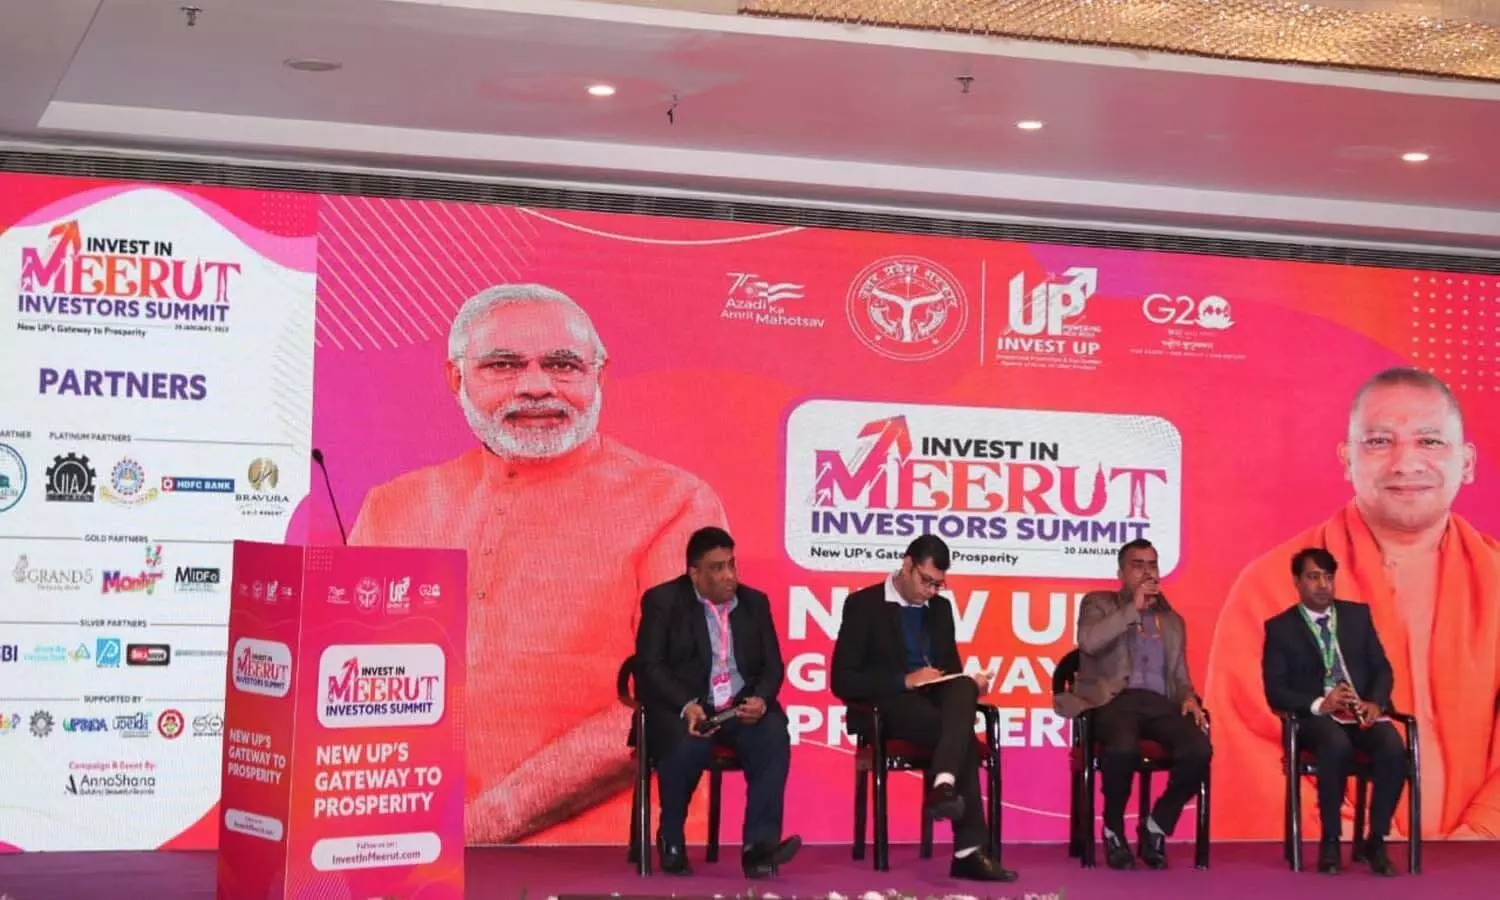 Investors Summit was organized in Meerut, Nand Gopal Gupta Nandi said - UP is Indias fastest growing economy